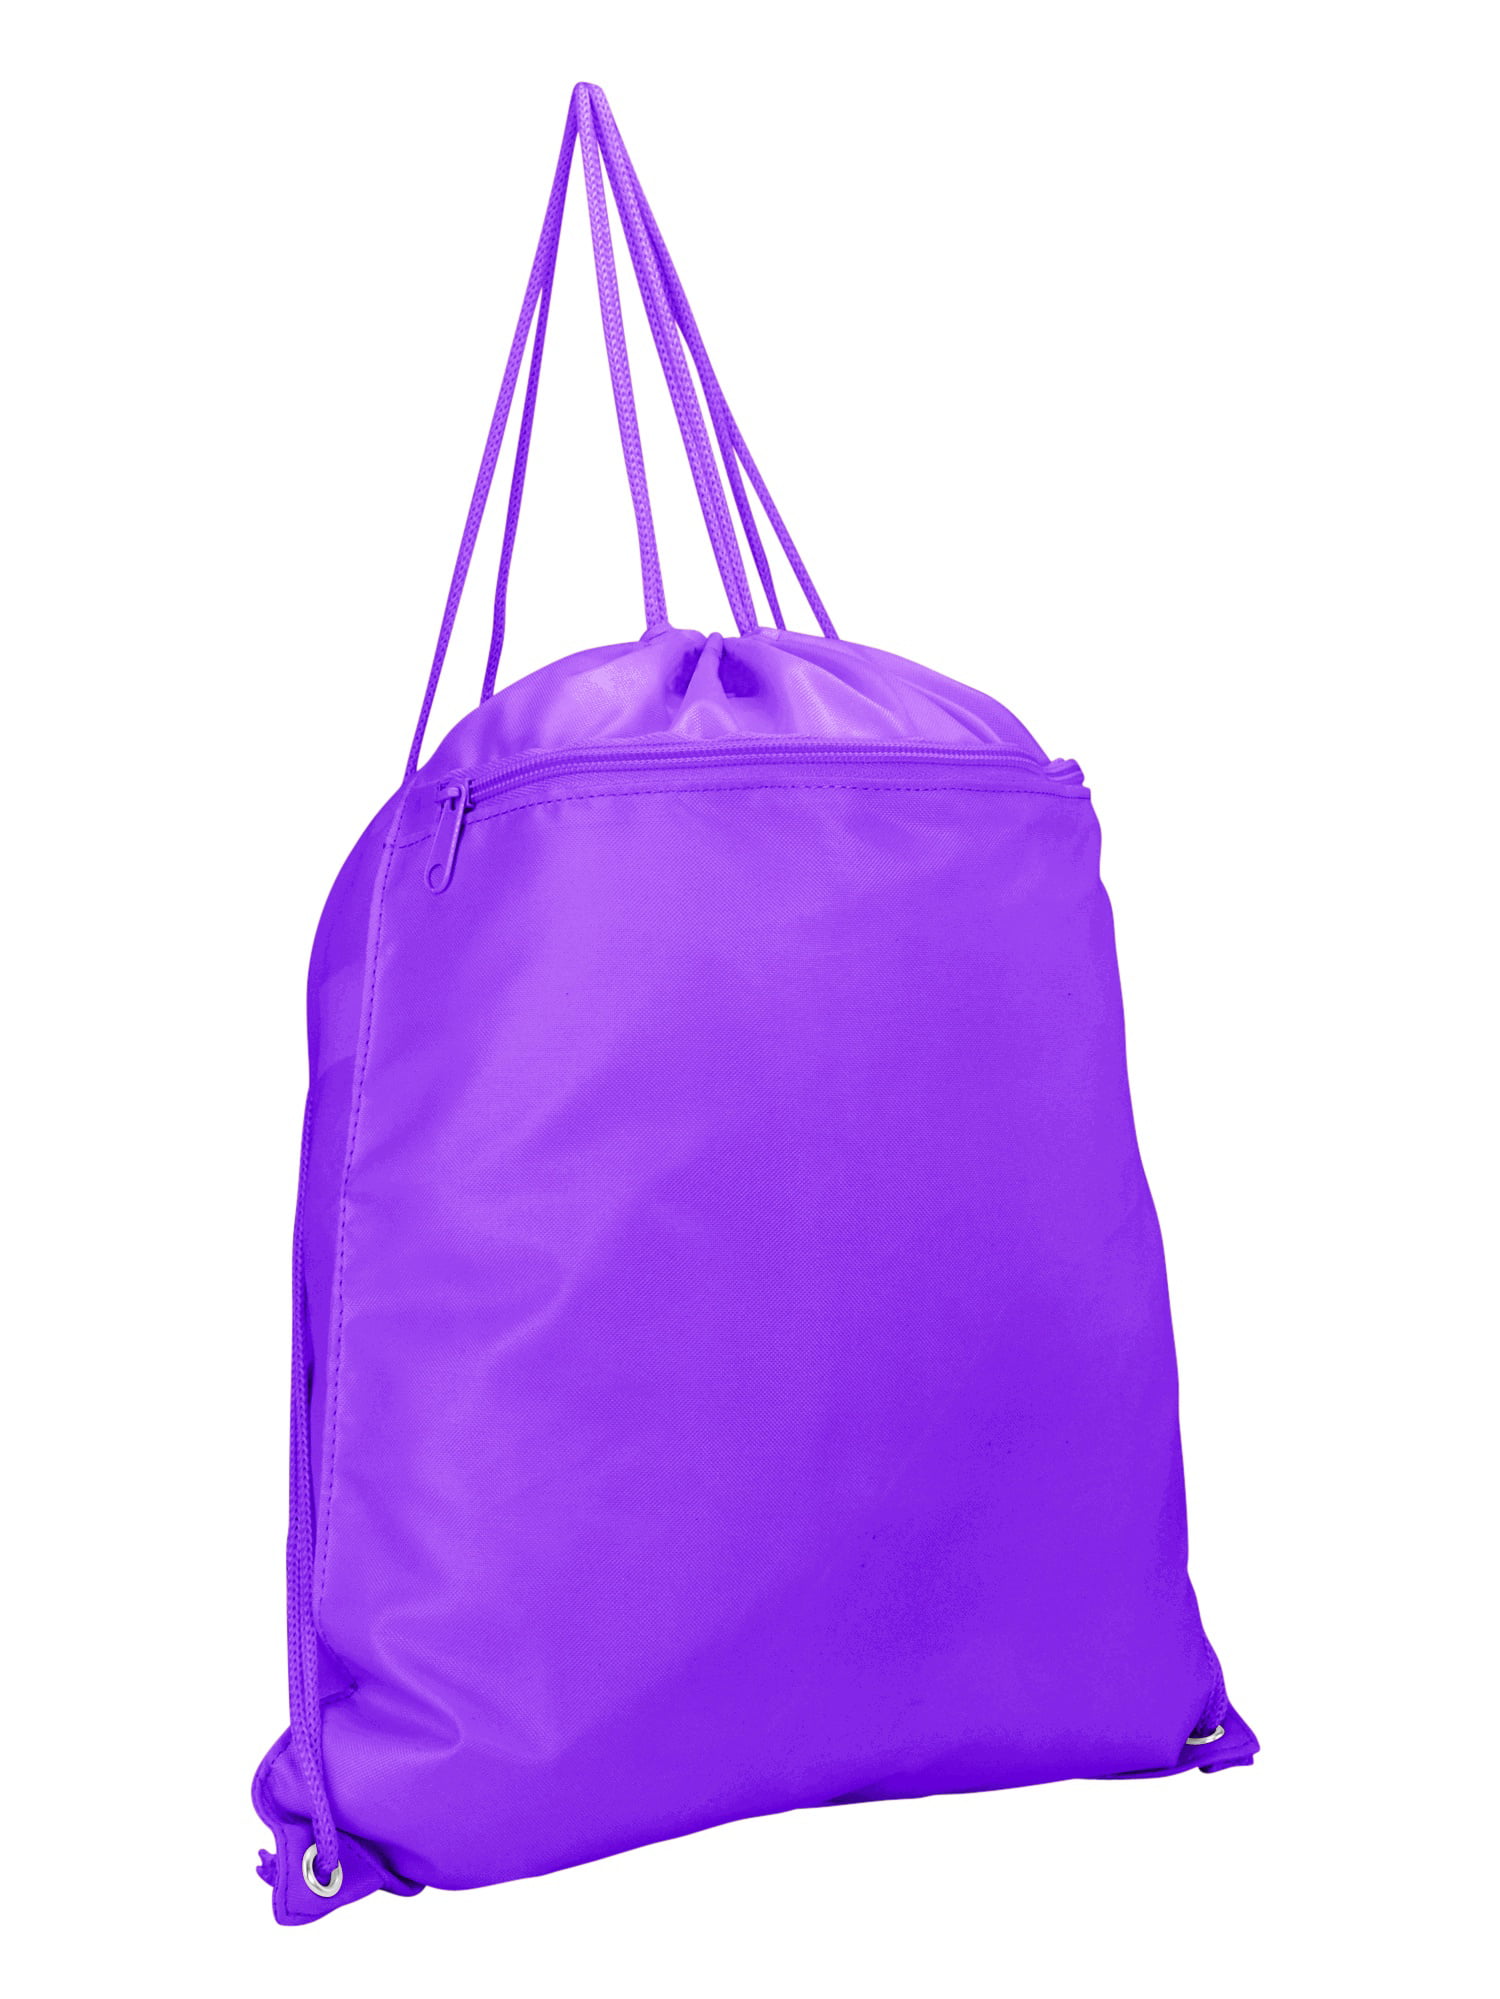 Abstract Panting Cinch Backpack Sackpack Tote Sack Lightweight Waterproof Large Storage Drawstring Bag For Men & Women